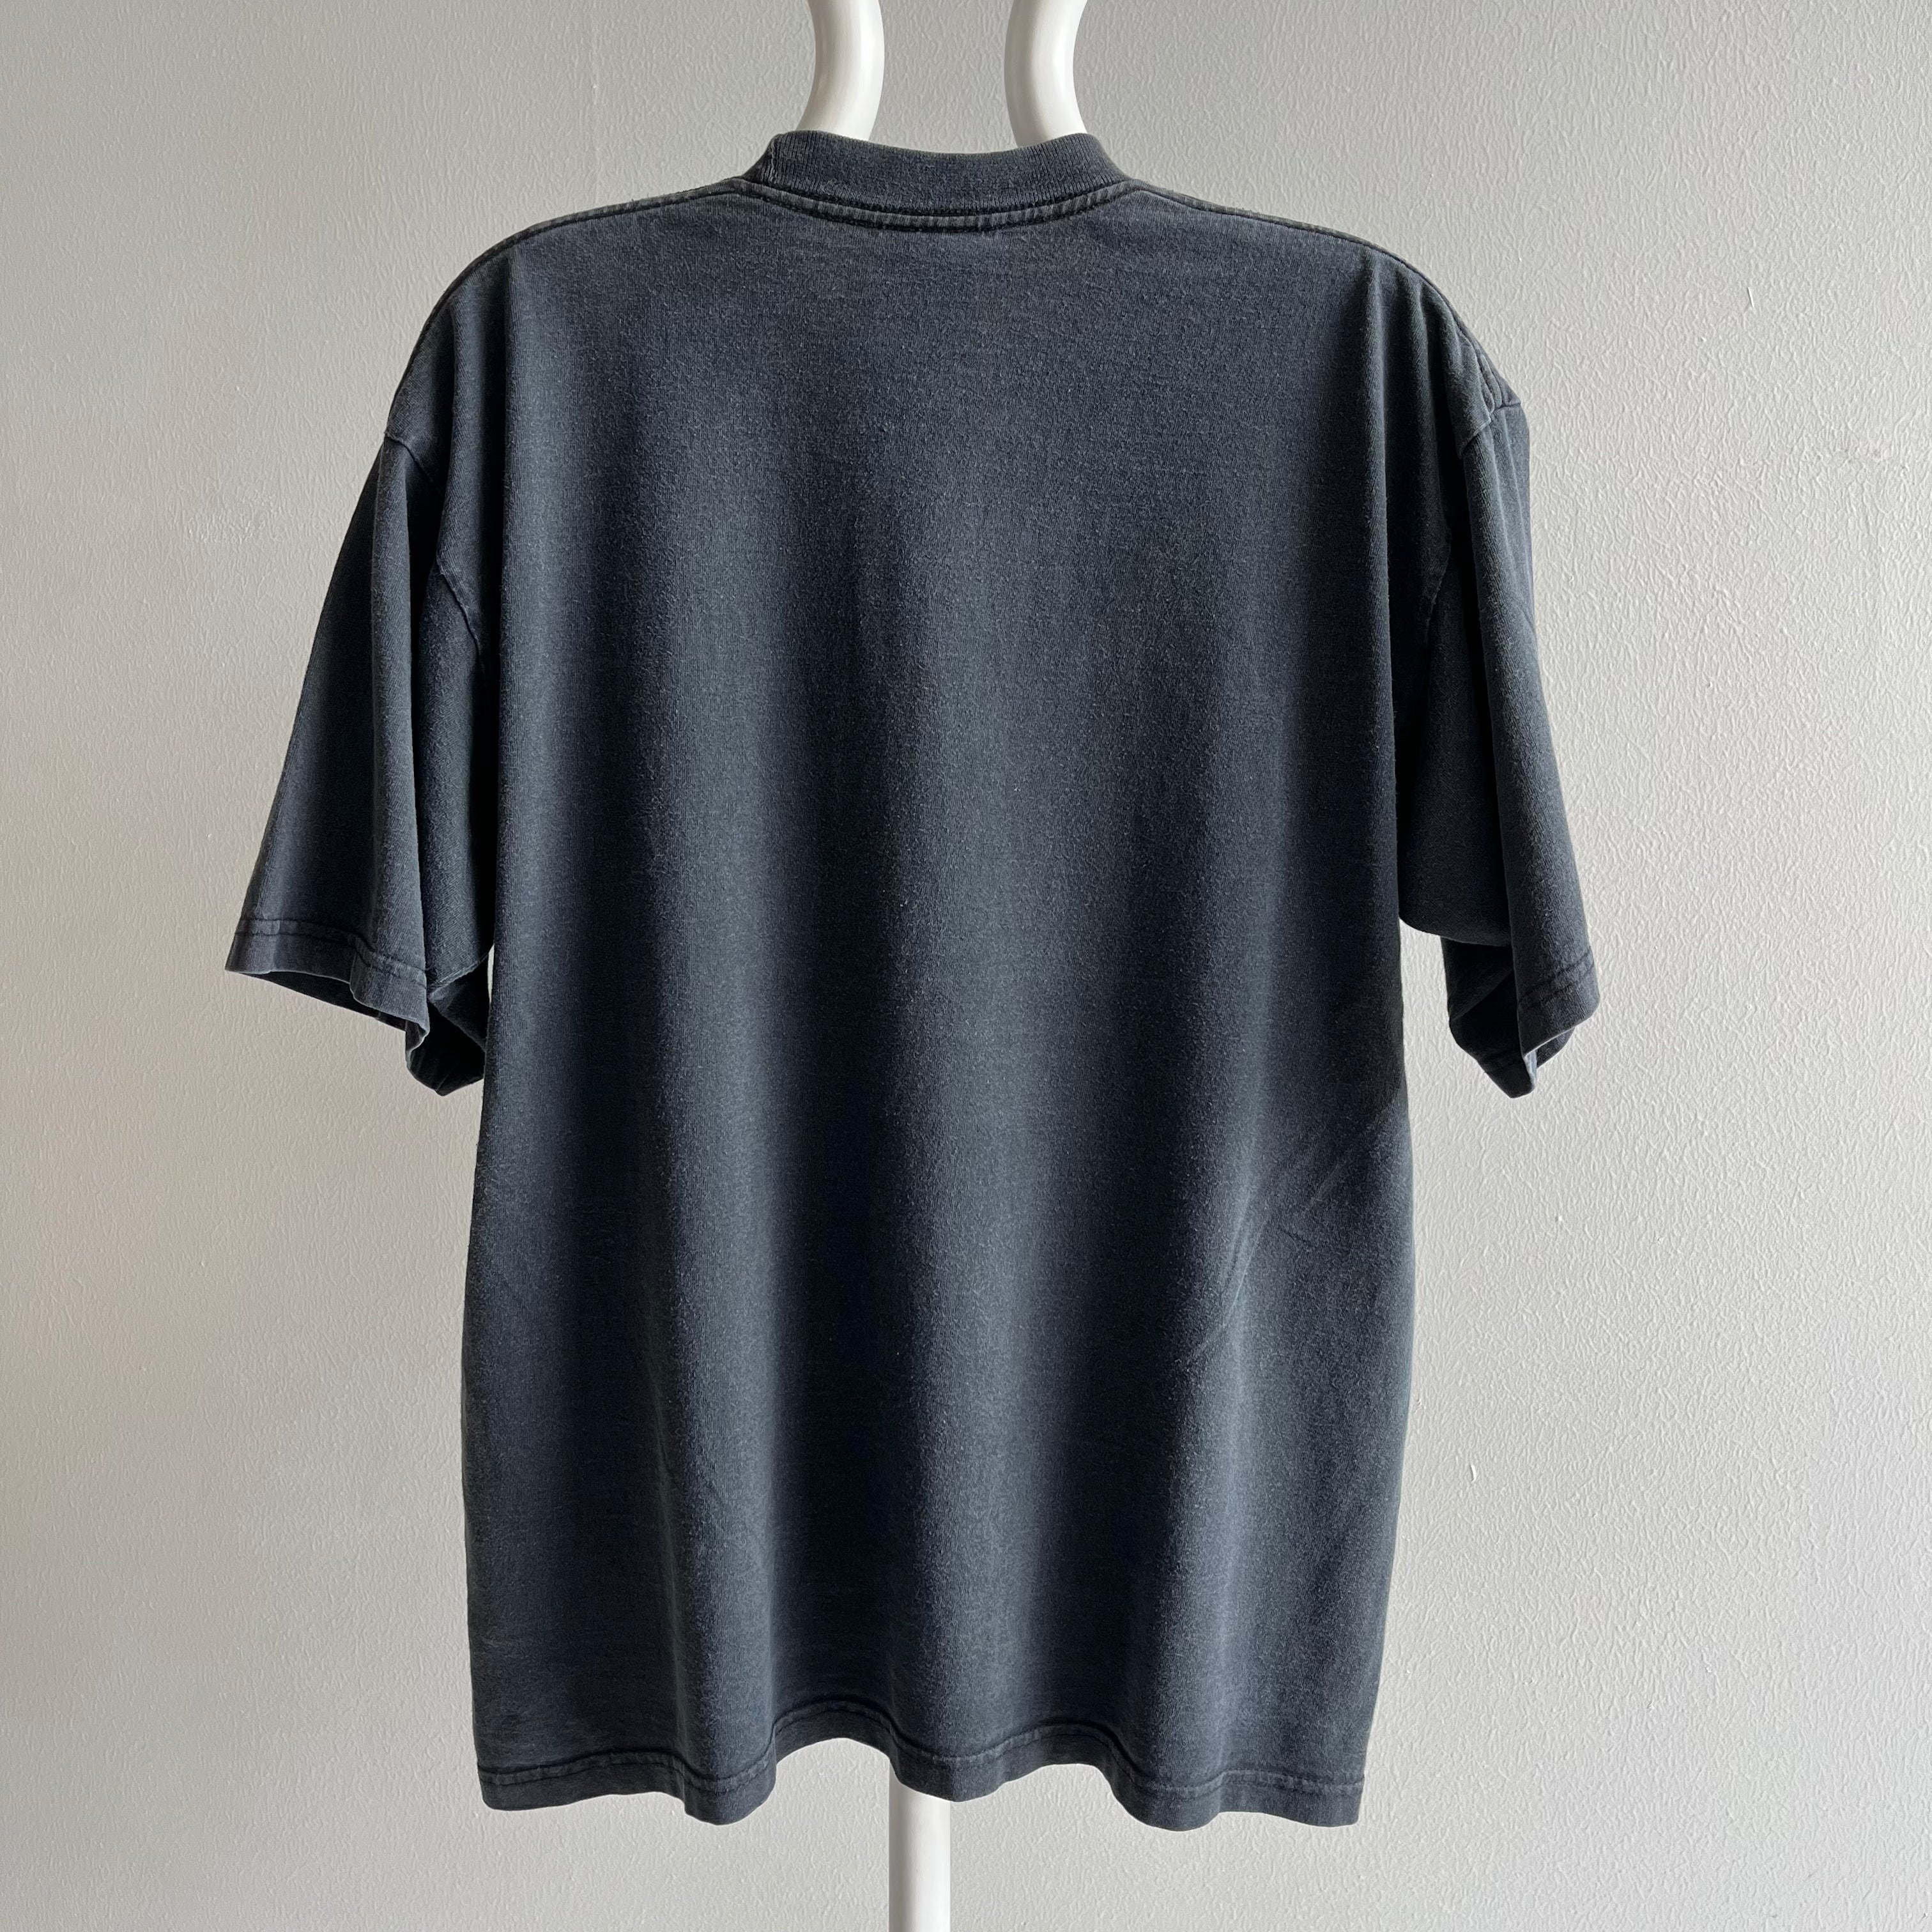 1990s Blank Faded Black to Gray Boxy T-Shirt